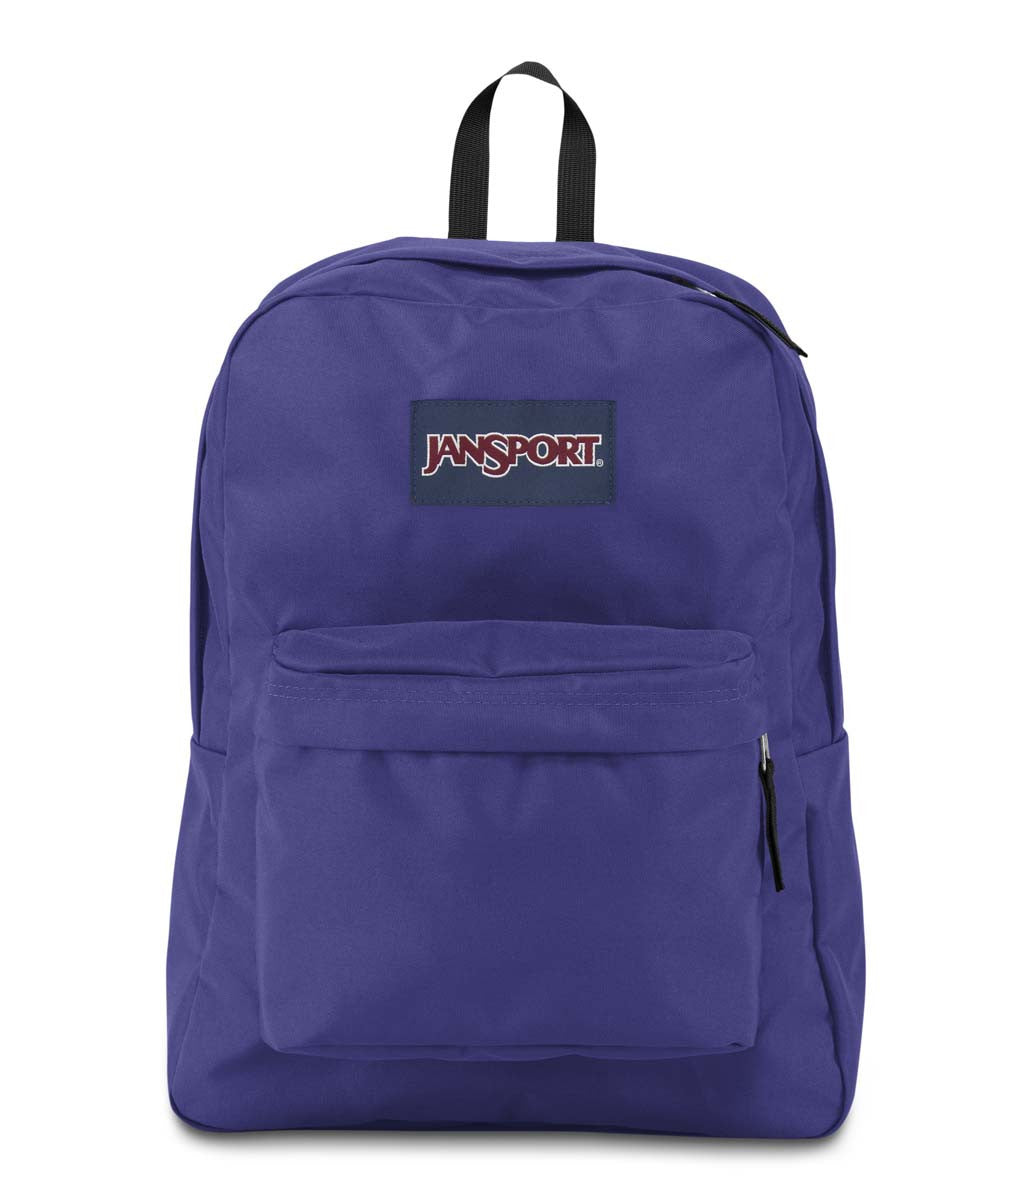 USA JAN SPORT  レア purple backpack